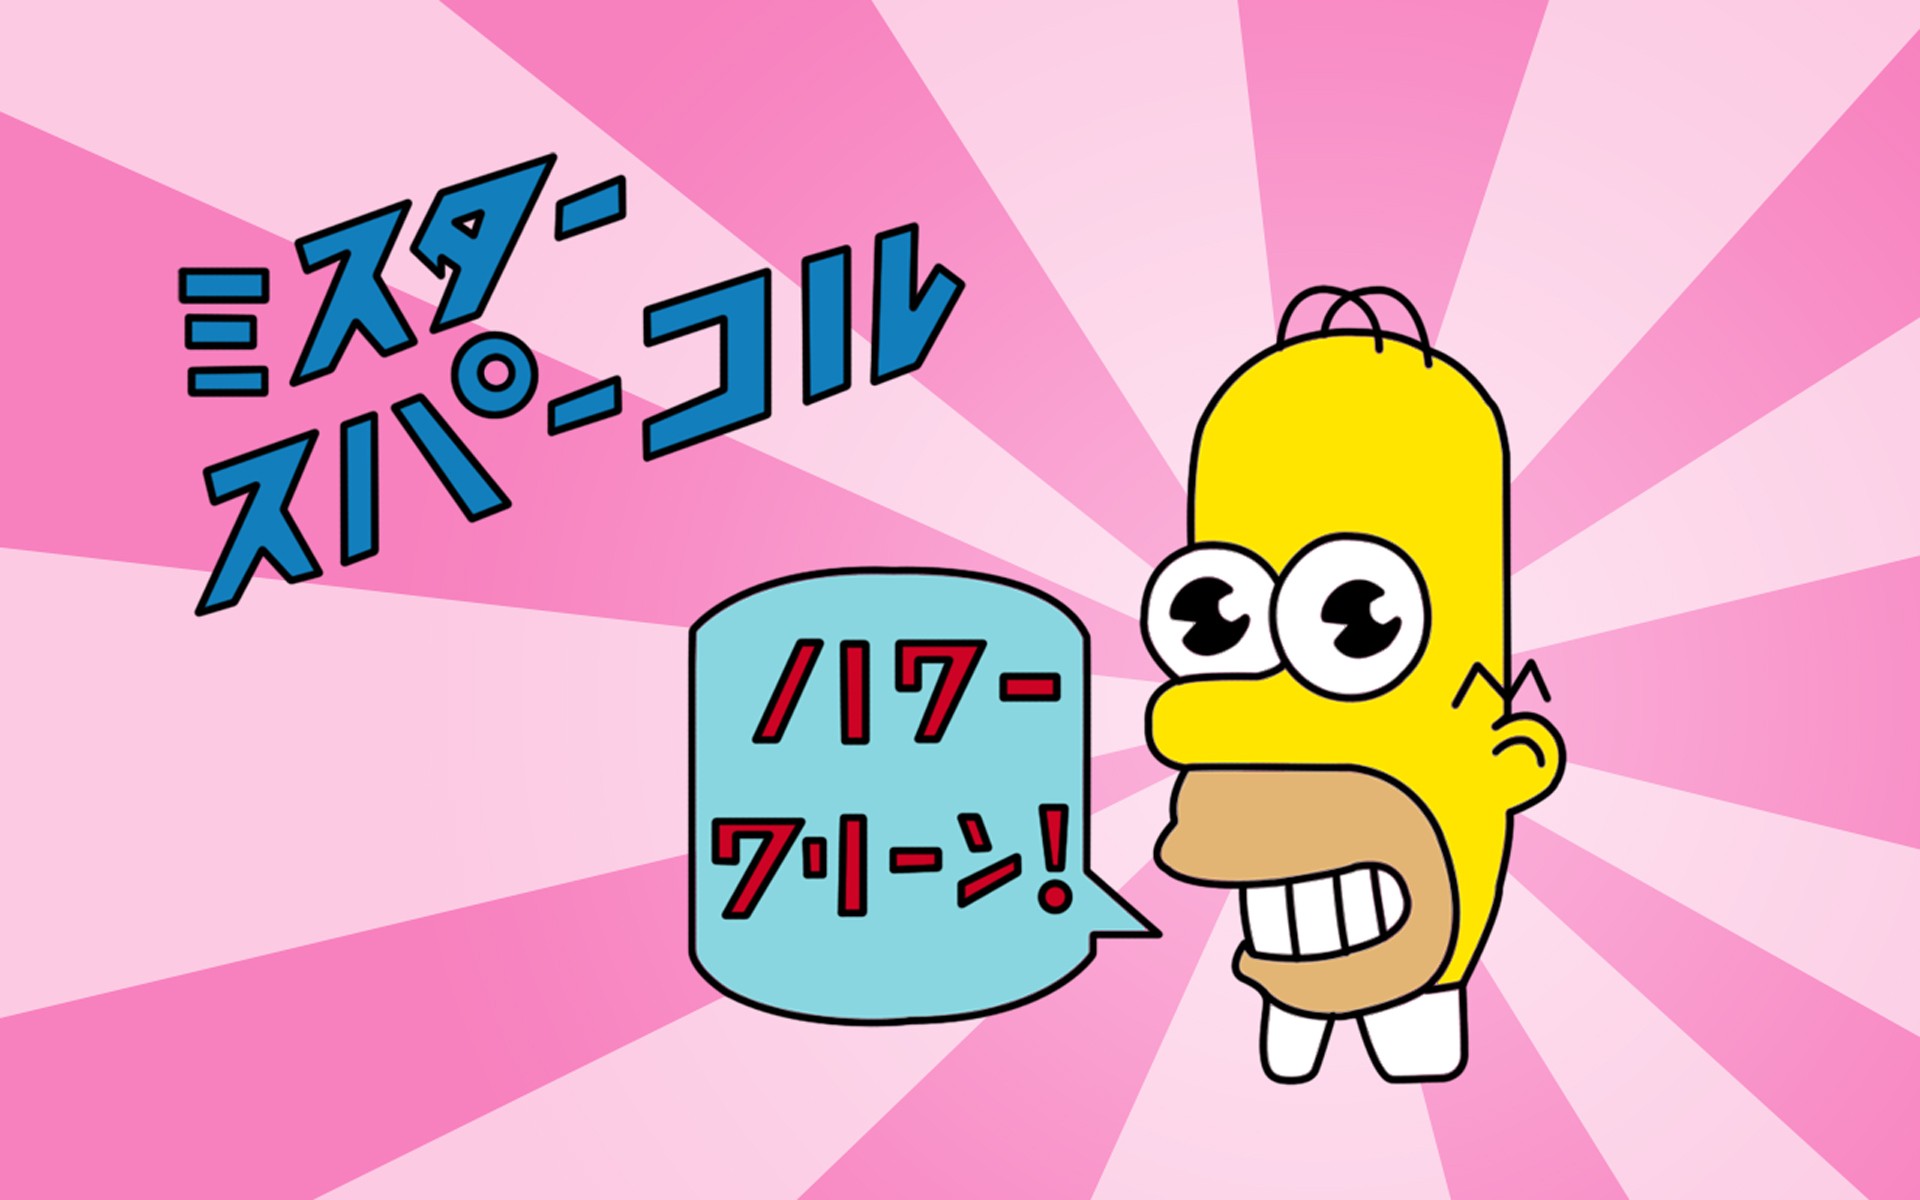 General 1920x1200 Homer Simpson pink The Simpsons advertisements TV series cartoon speech bubble